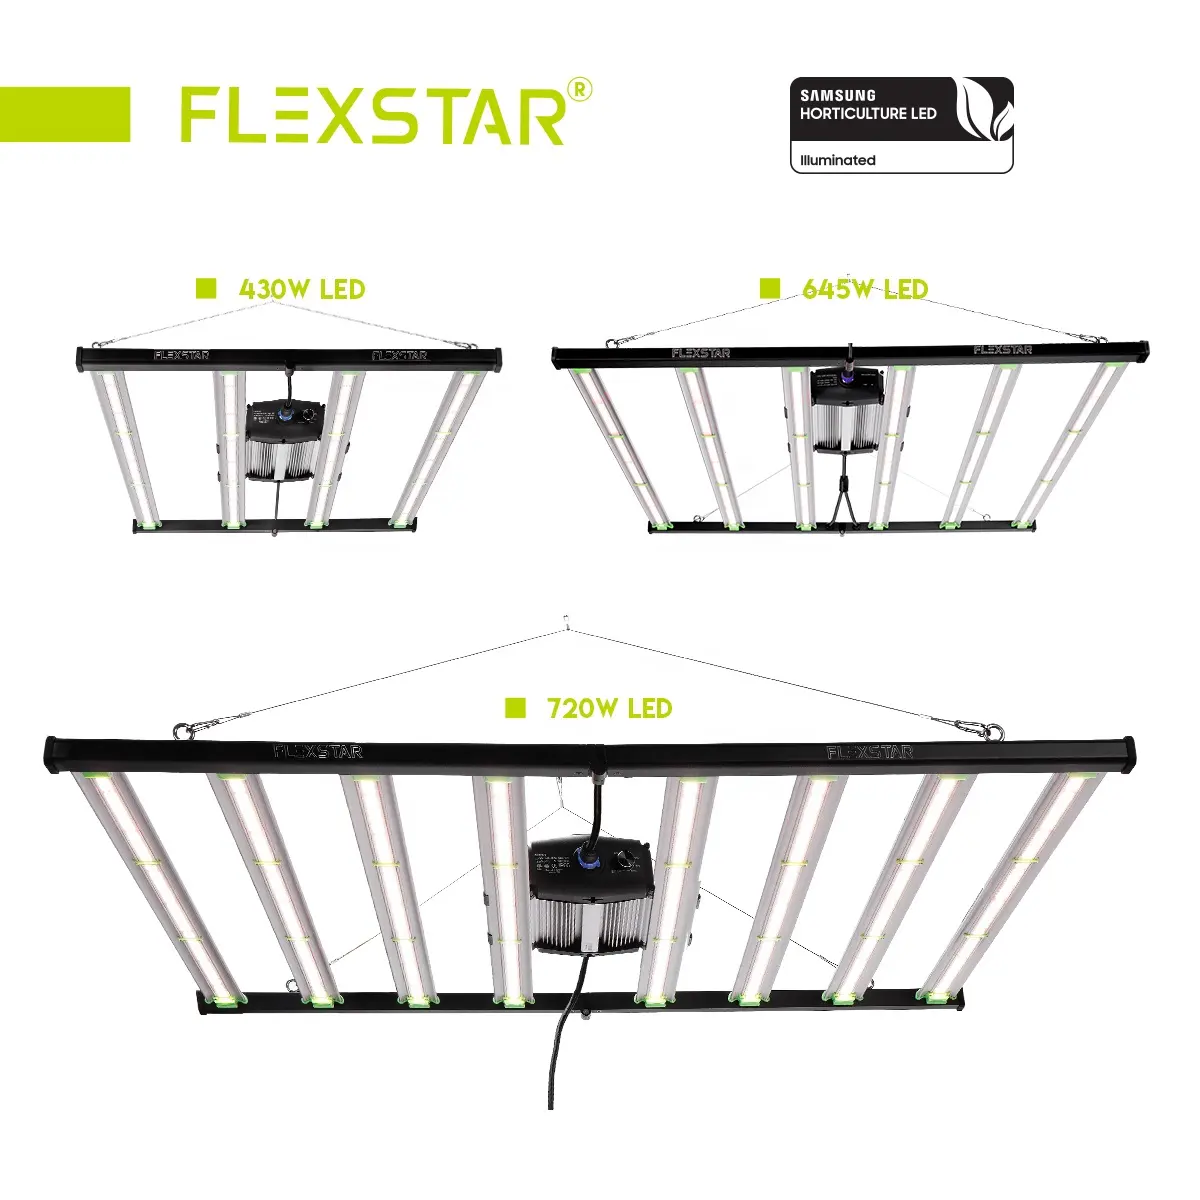 Flexstar Pro-luz LED para cultivo, rendimiento de hasta 4 libras, 301h, 301b, 2,8 umol/J, eficacia superior a 1700e